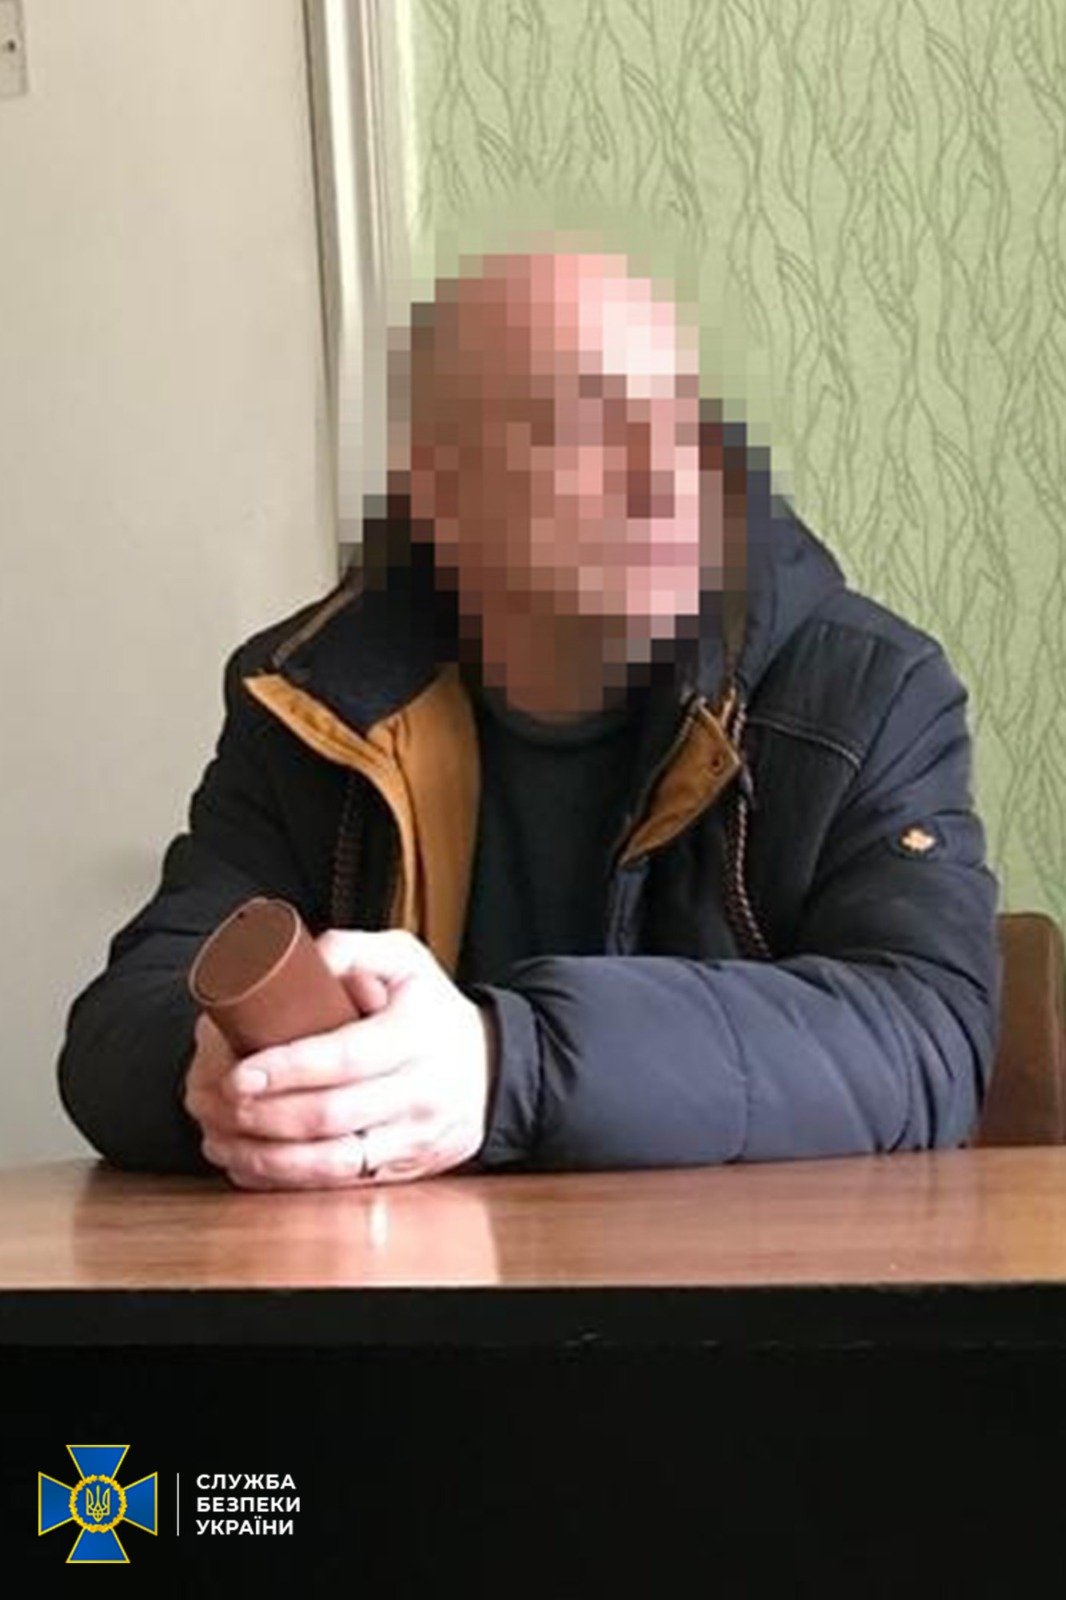 ​Пропагандист Медведчука попал за решетку по делу о госизмене: СБУ раскрыла подробности